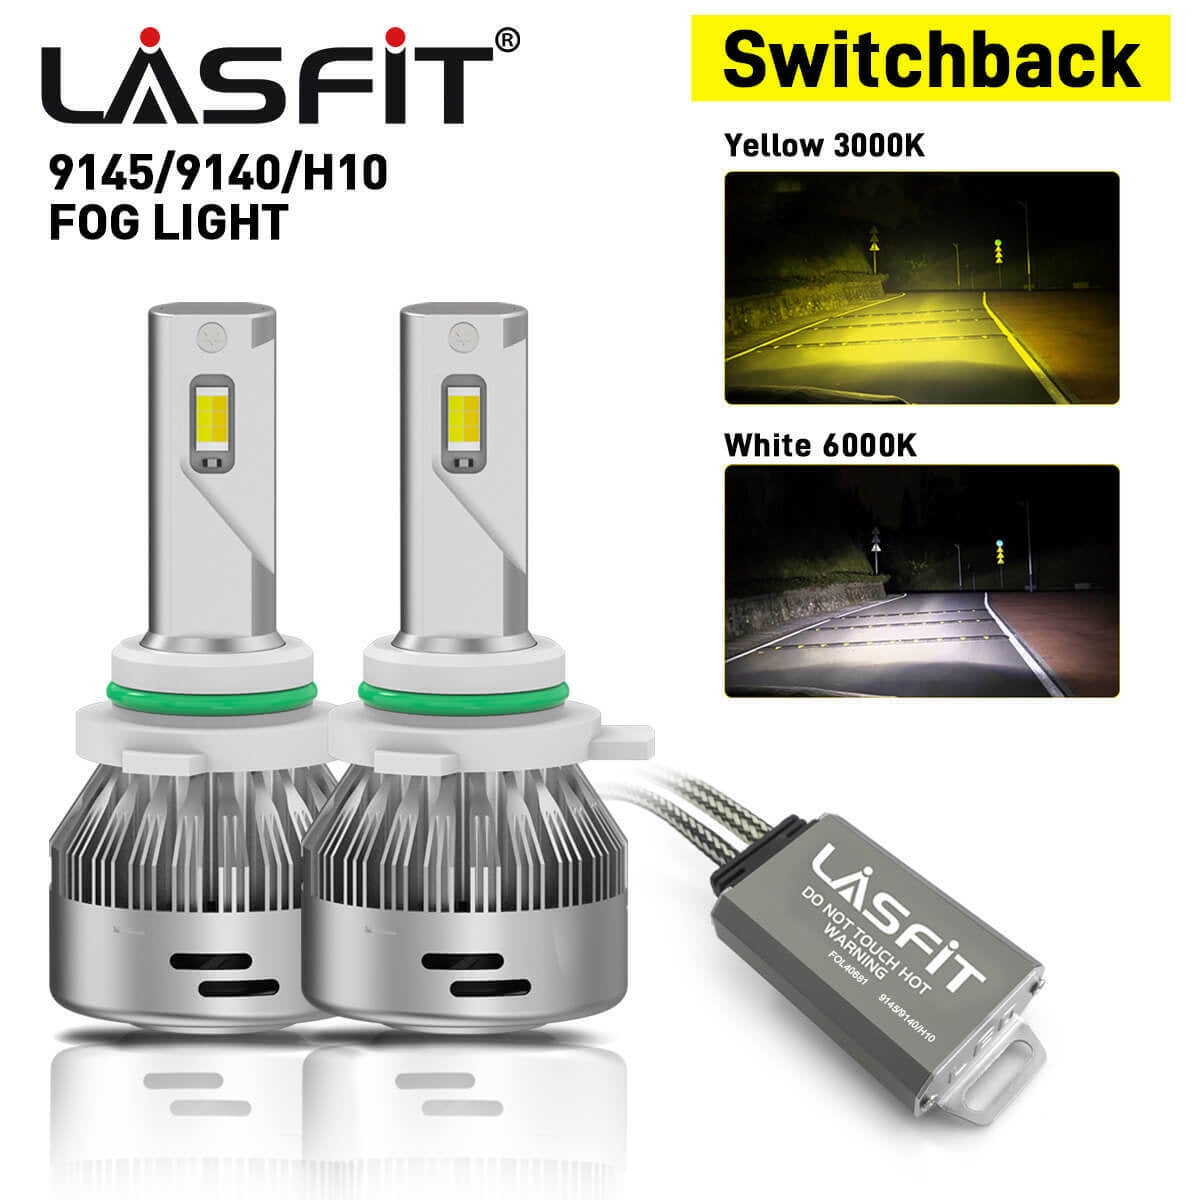 Lasfit 9006 HB4 LED Headlight Bulbs, Switchback Low Beam Fog Light, 60W  6000LM 2 Modes 